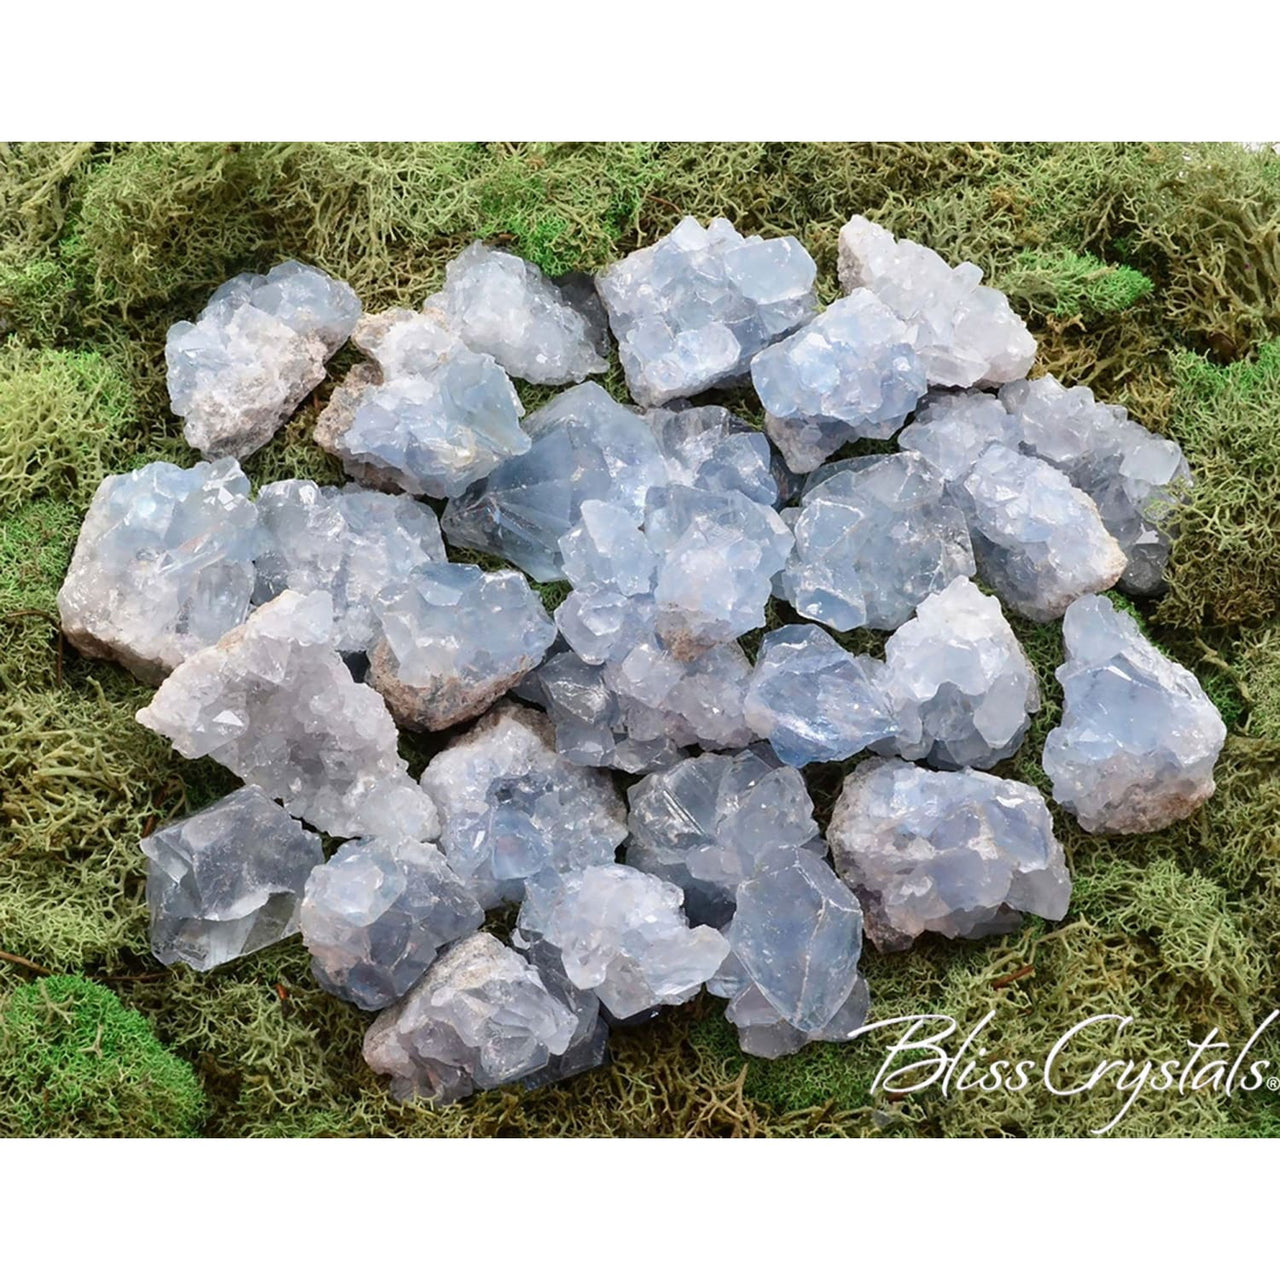 1 CELESTITE Mini Geode Rough Mineral Point Specimen Crystal 